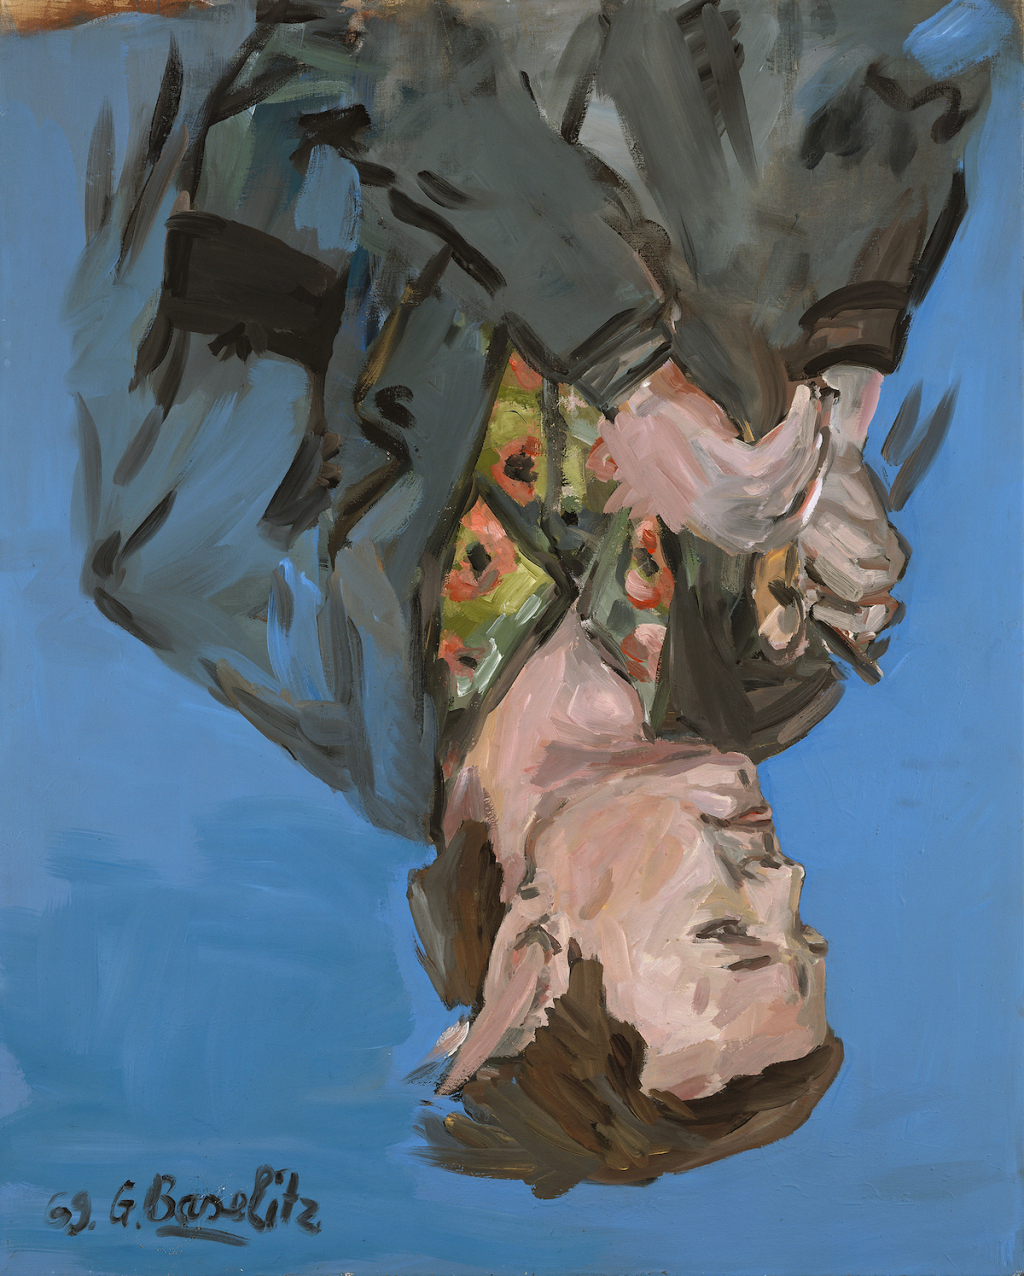 Georg Baselitz Gifts Six Inverted Portraits to the Metropolitan Museum – ARTnews.com